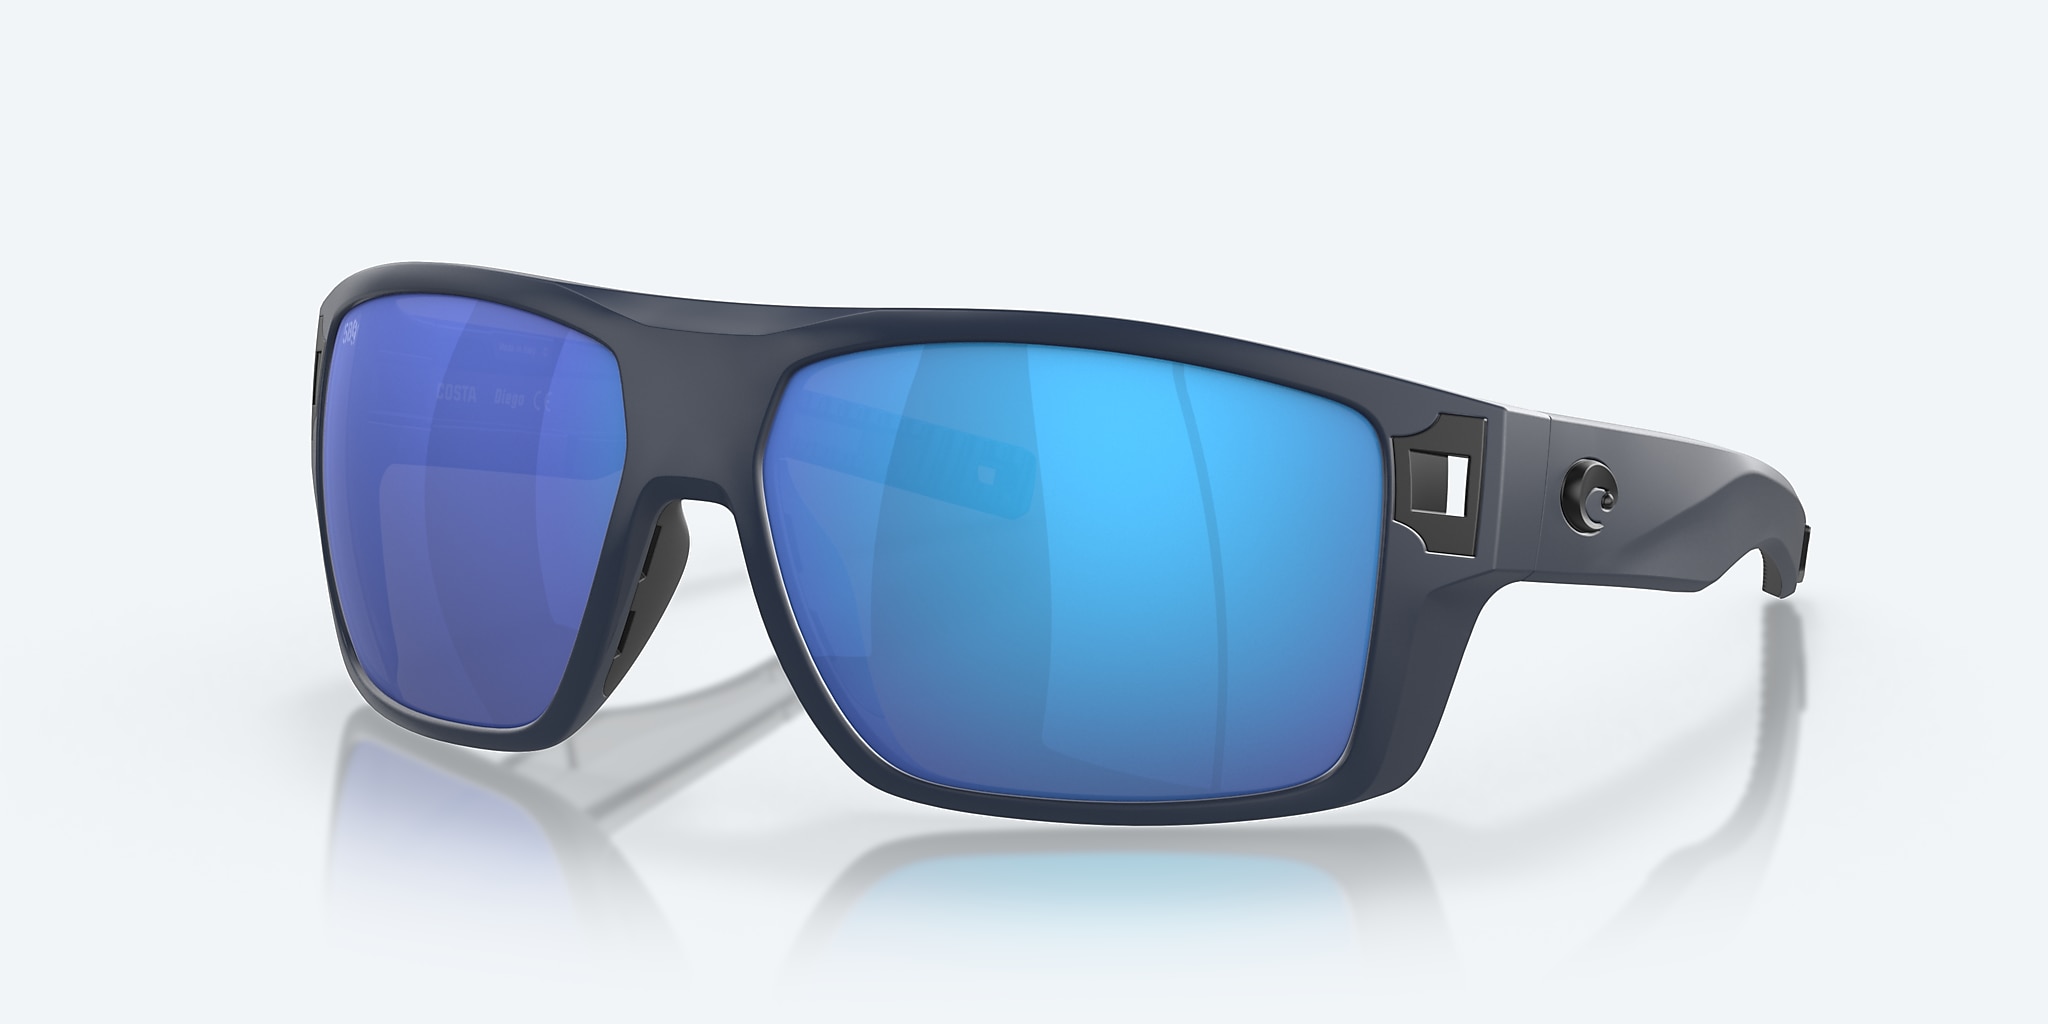 Diego Polarized Sunglasses in Blue Mirror